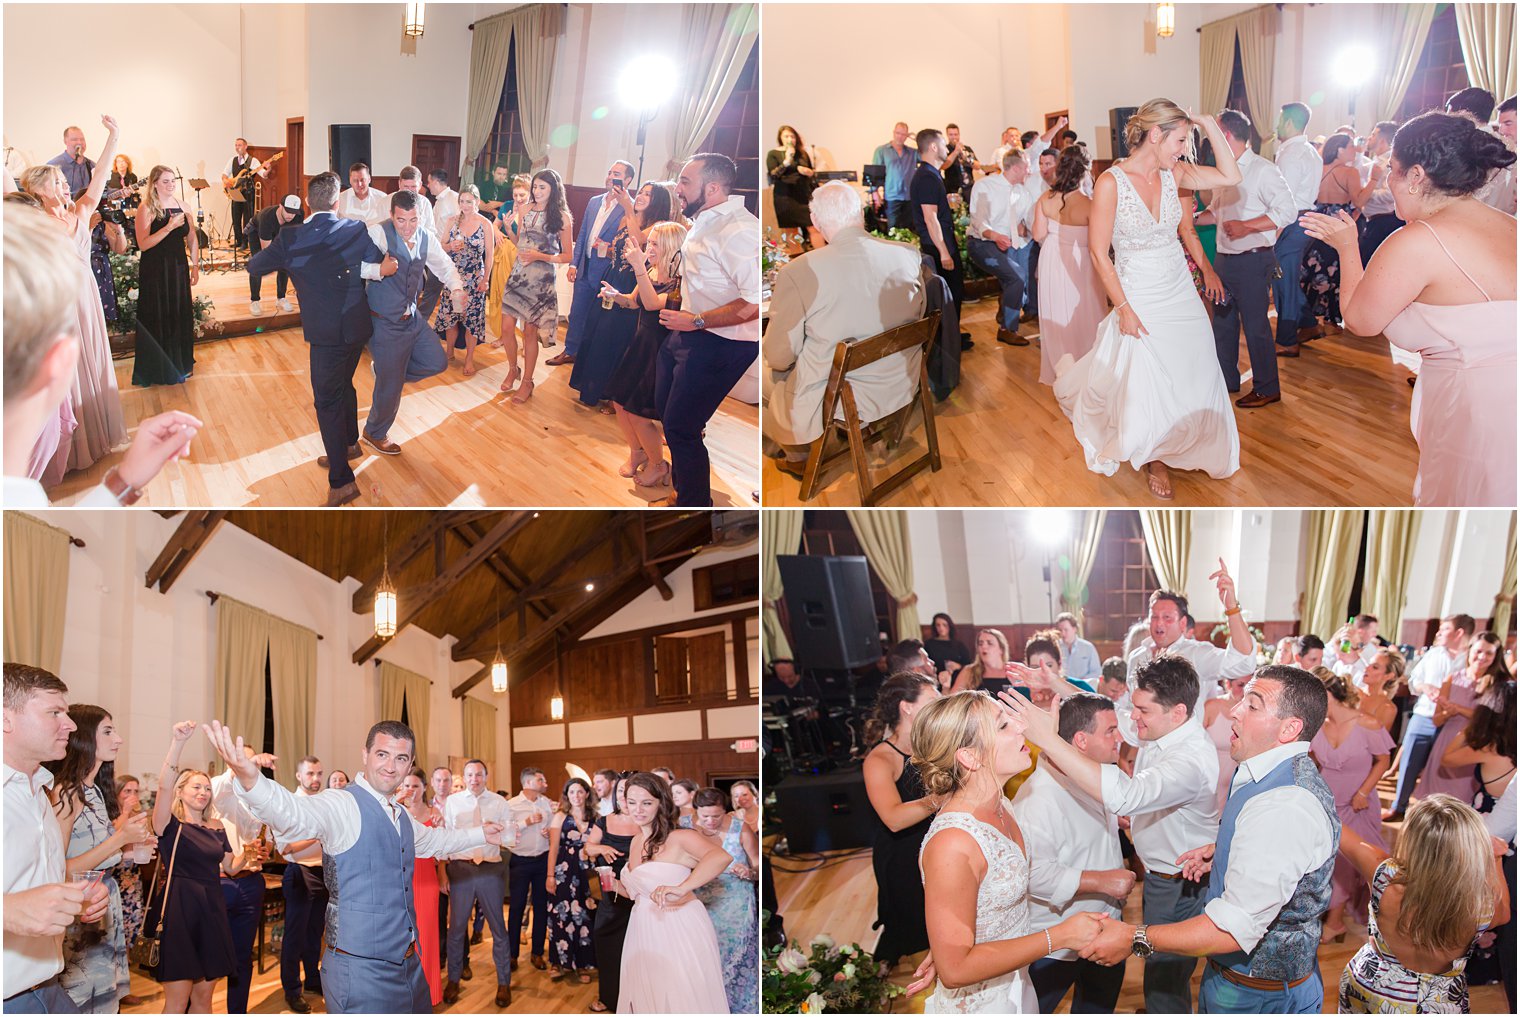 Sandy Hook Chapel wedding party photographed by Idalia Photography